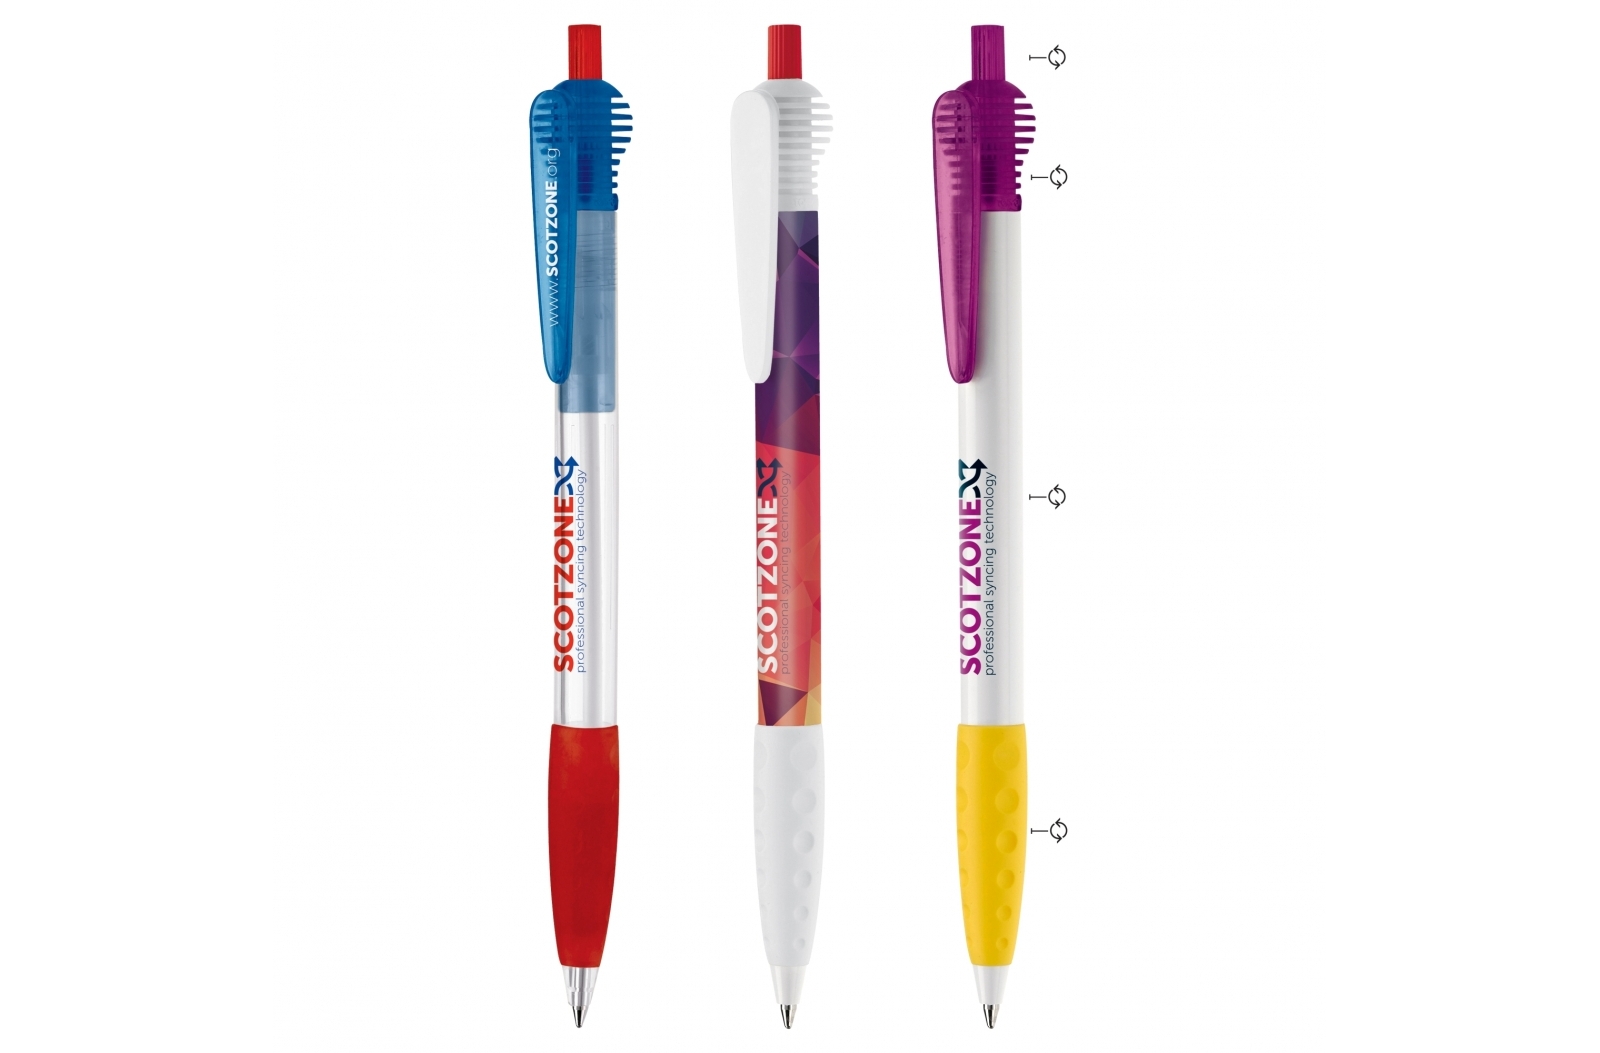 Toppoint X20 Design Pen - Ashton-under-Lyne - Roby